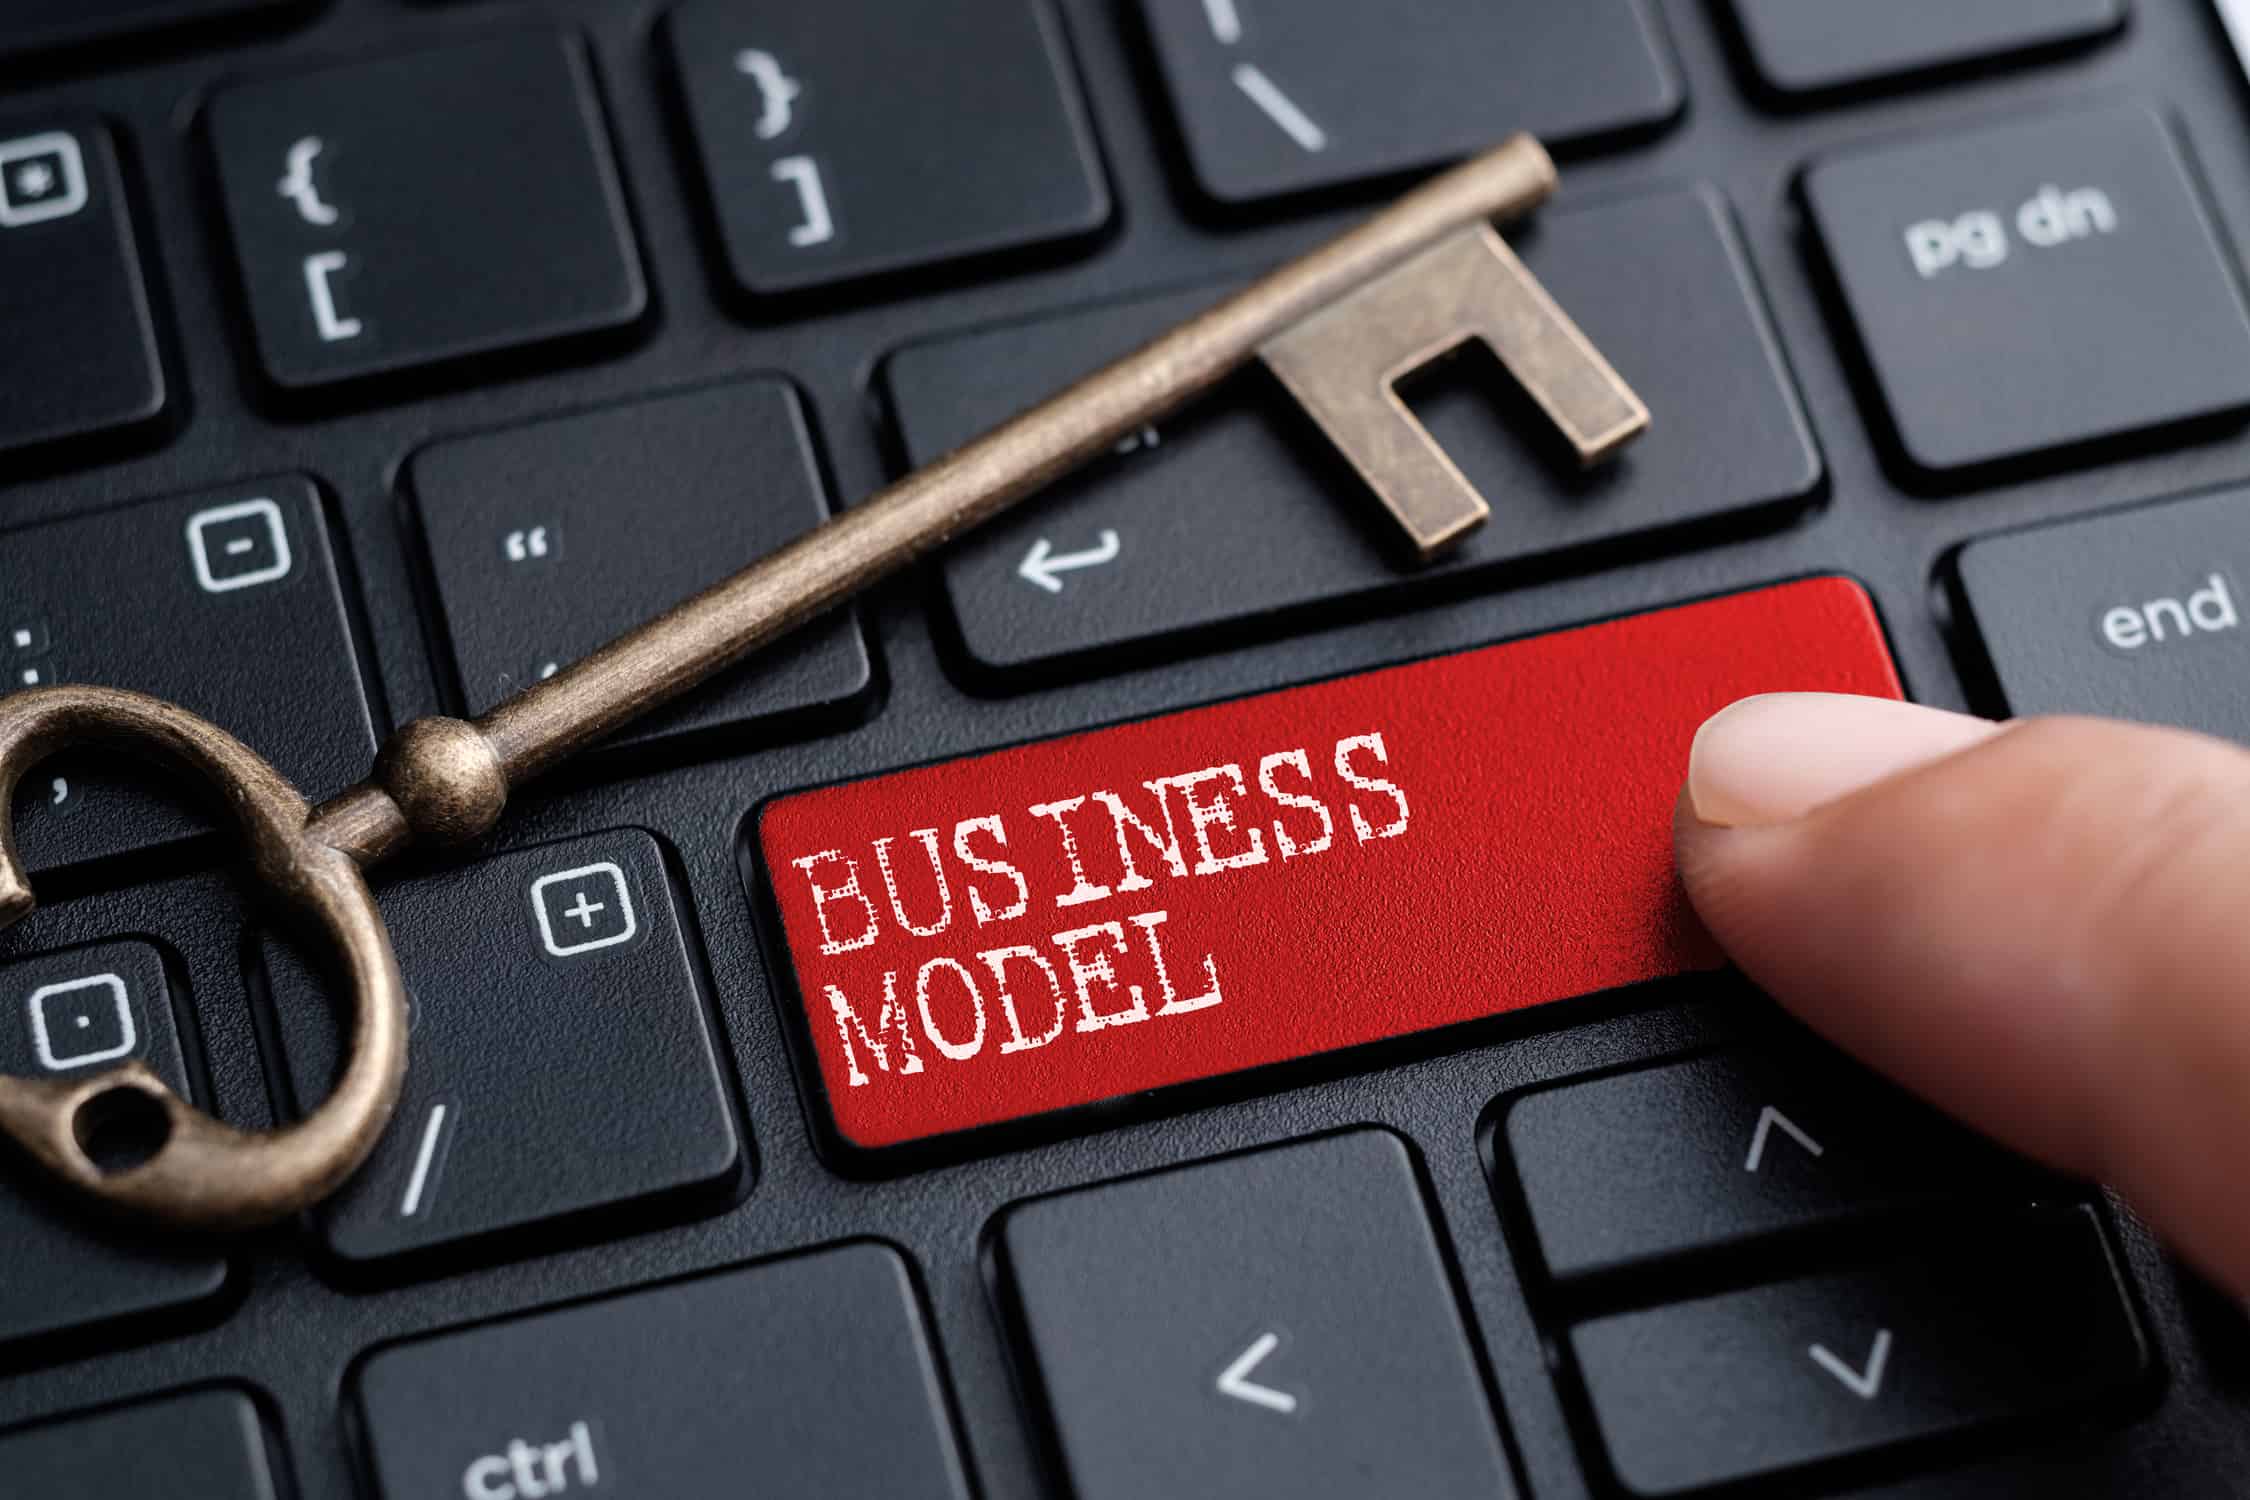 Business Model